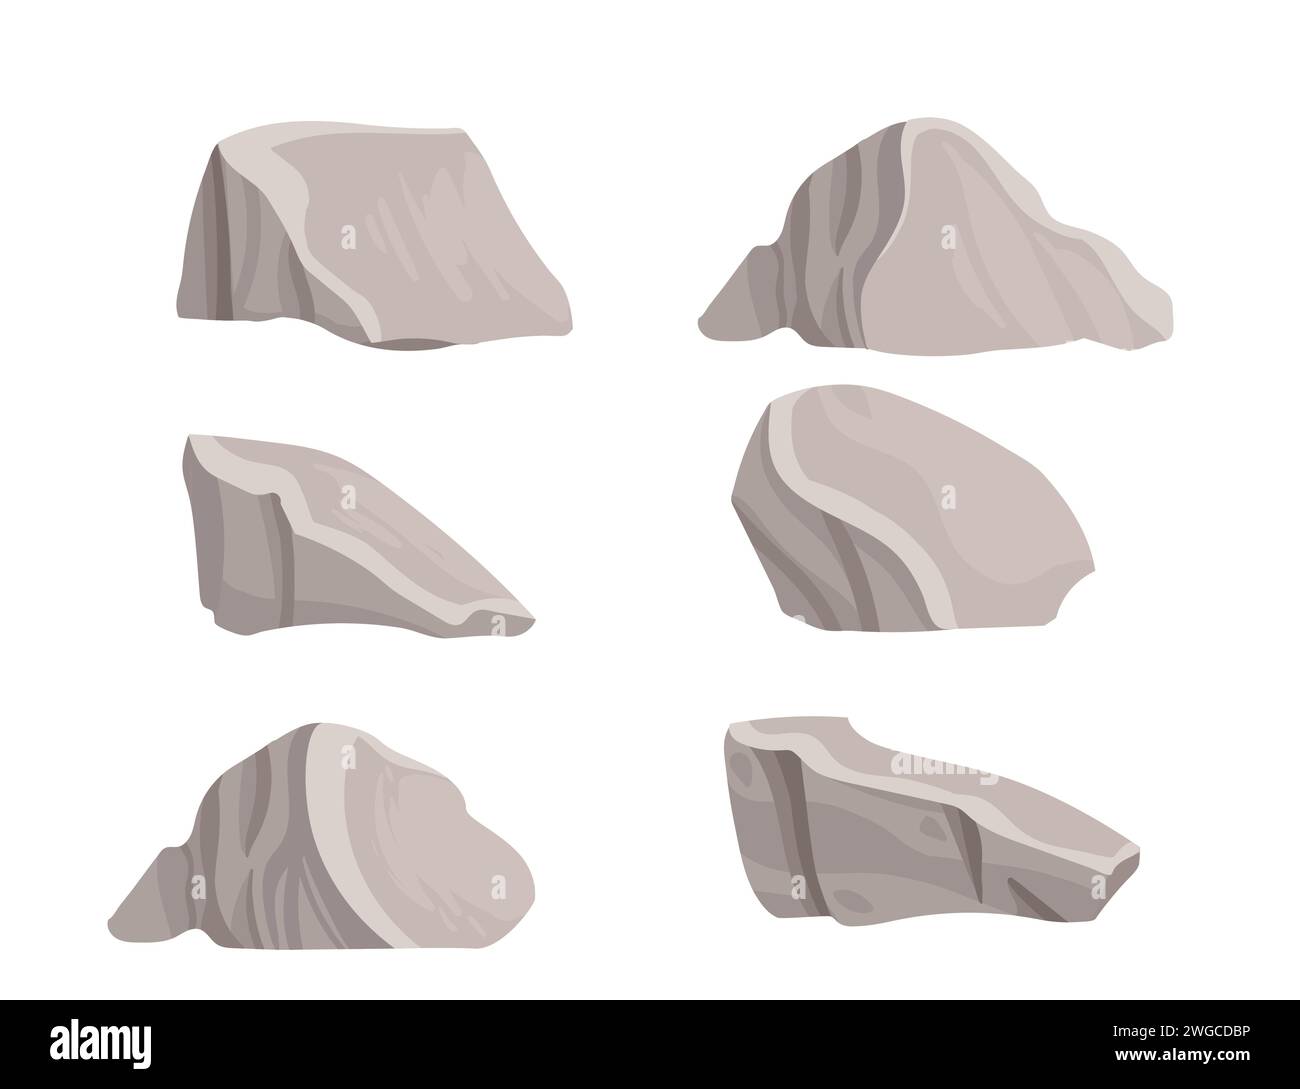 Set of grey aquarium decorative stones vector illustration isolated on white background Stock Vector